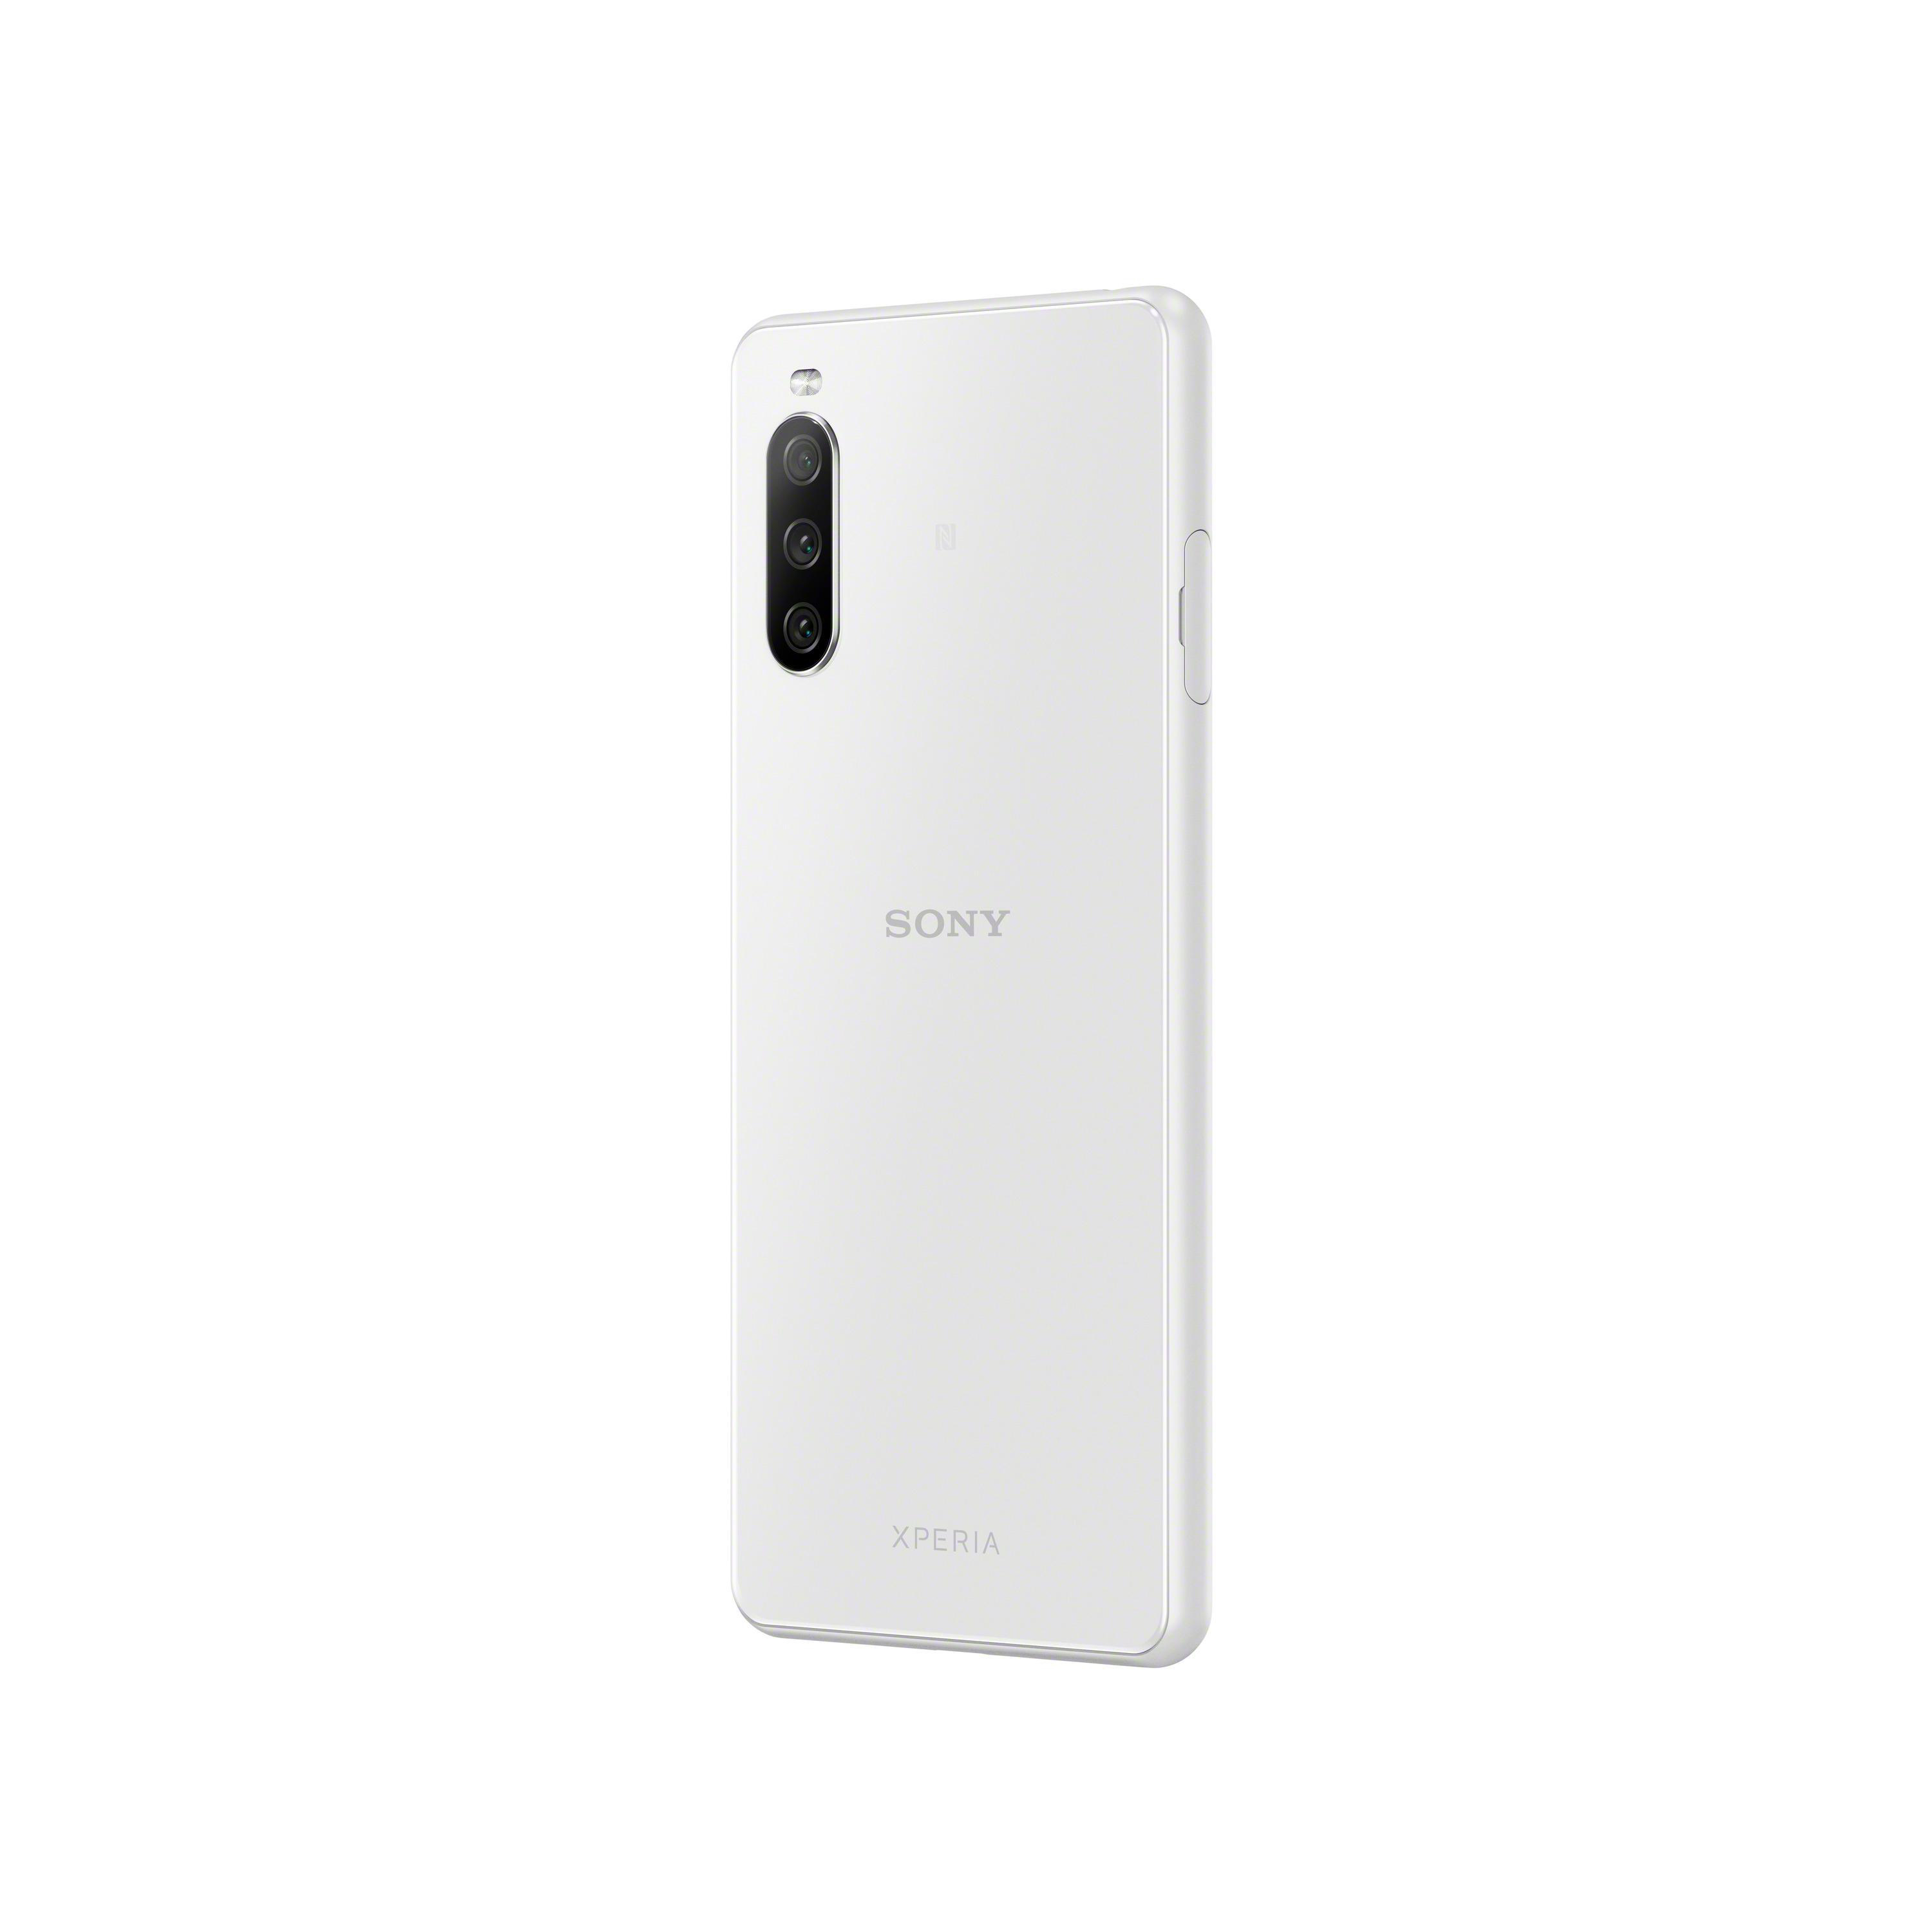 5G SIM 10 128 III SONY Weiß 21:9 GB Display Dual Xperia